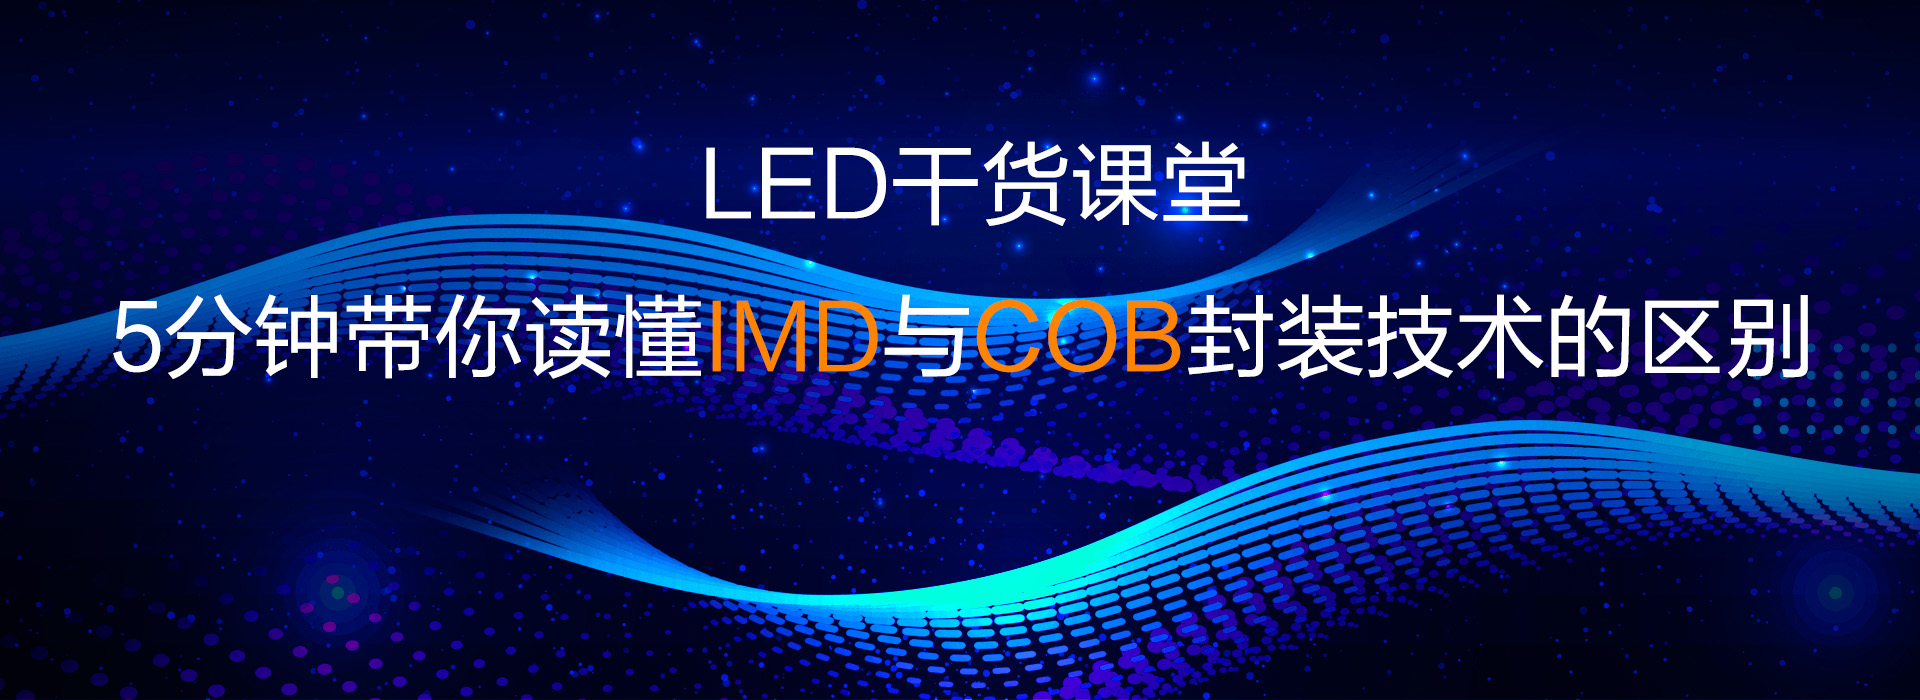 LED干貨課堂 | 5分鐘帶你讀懂IMD與COB封裝技術的區別